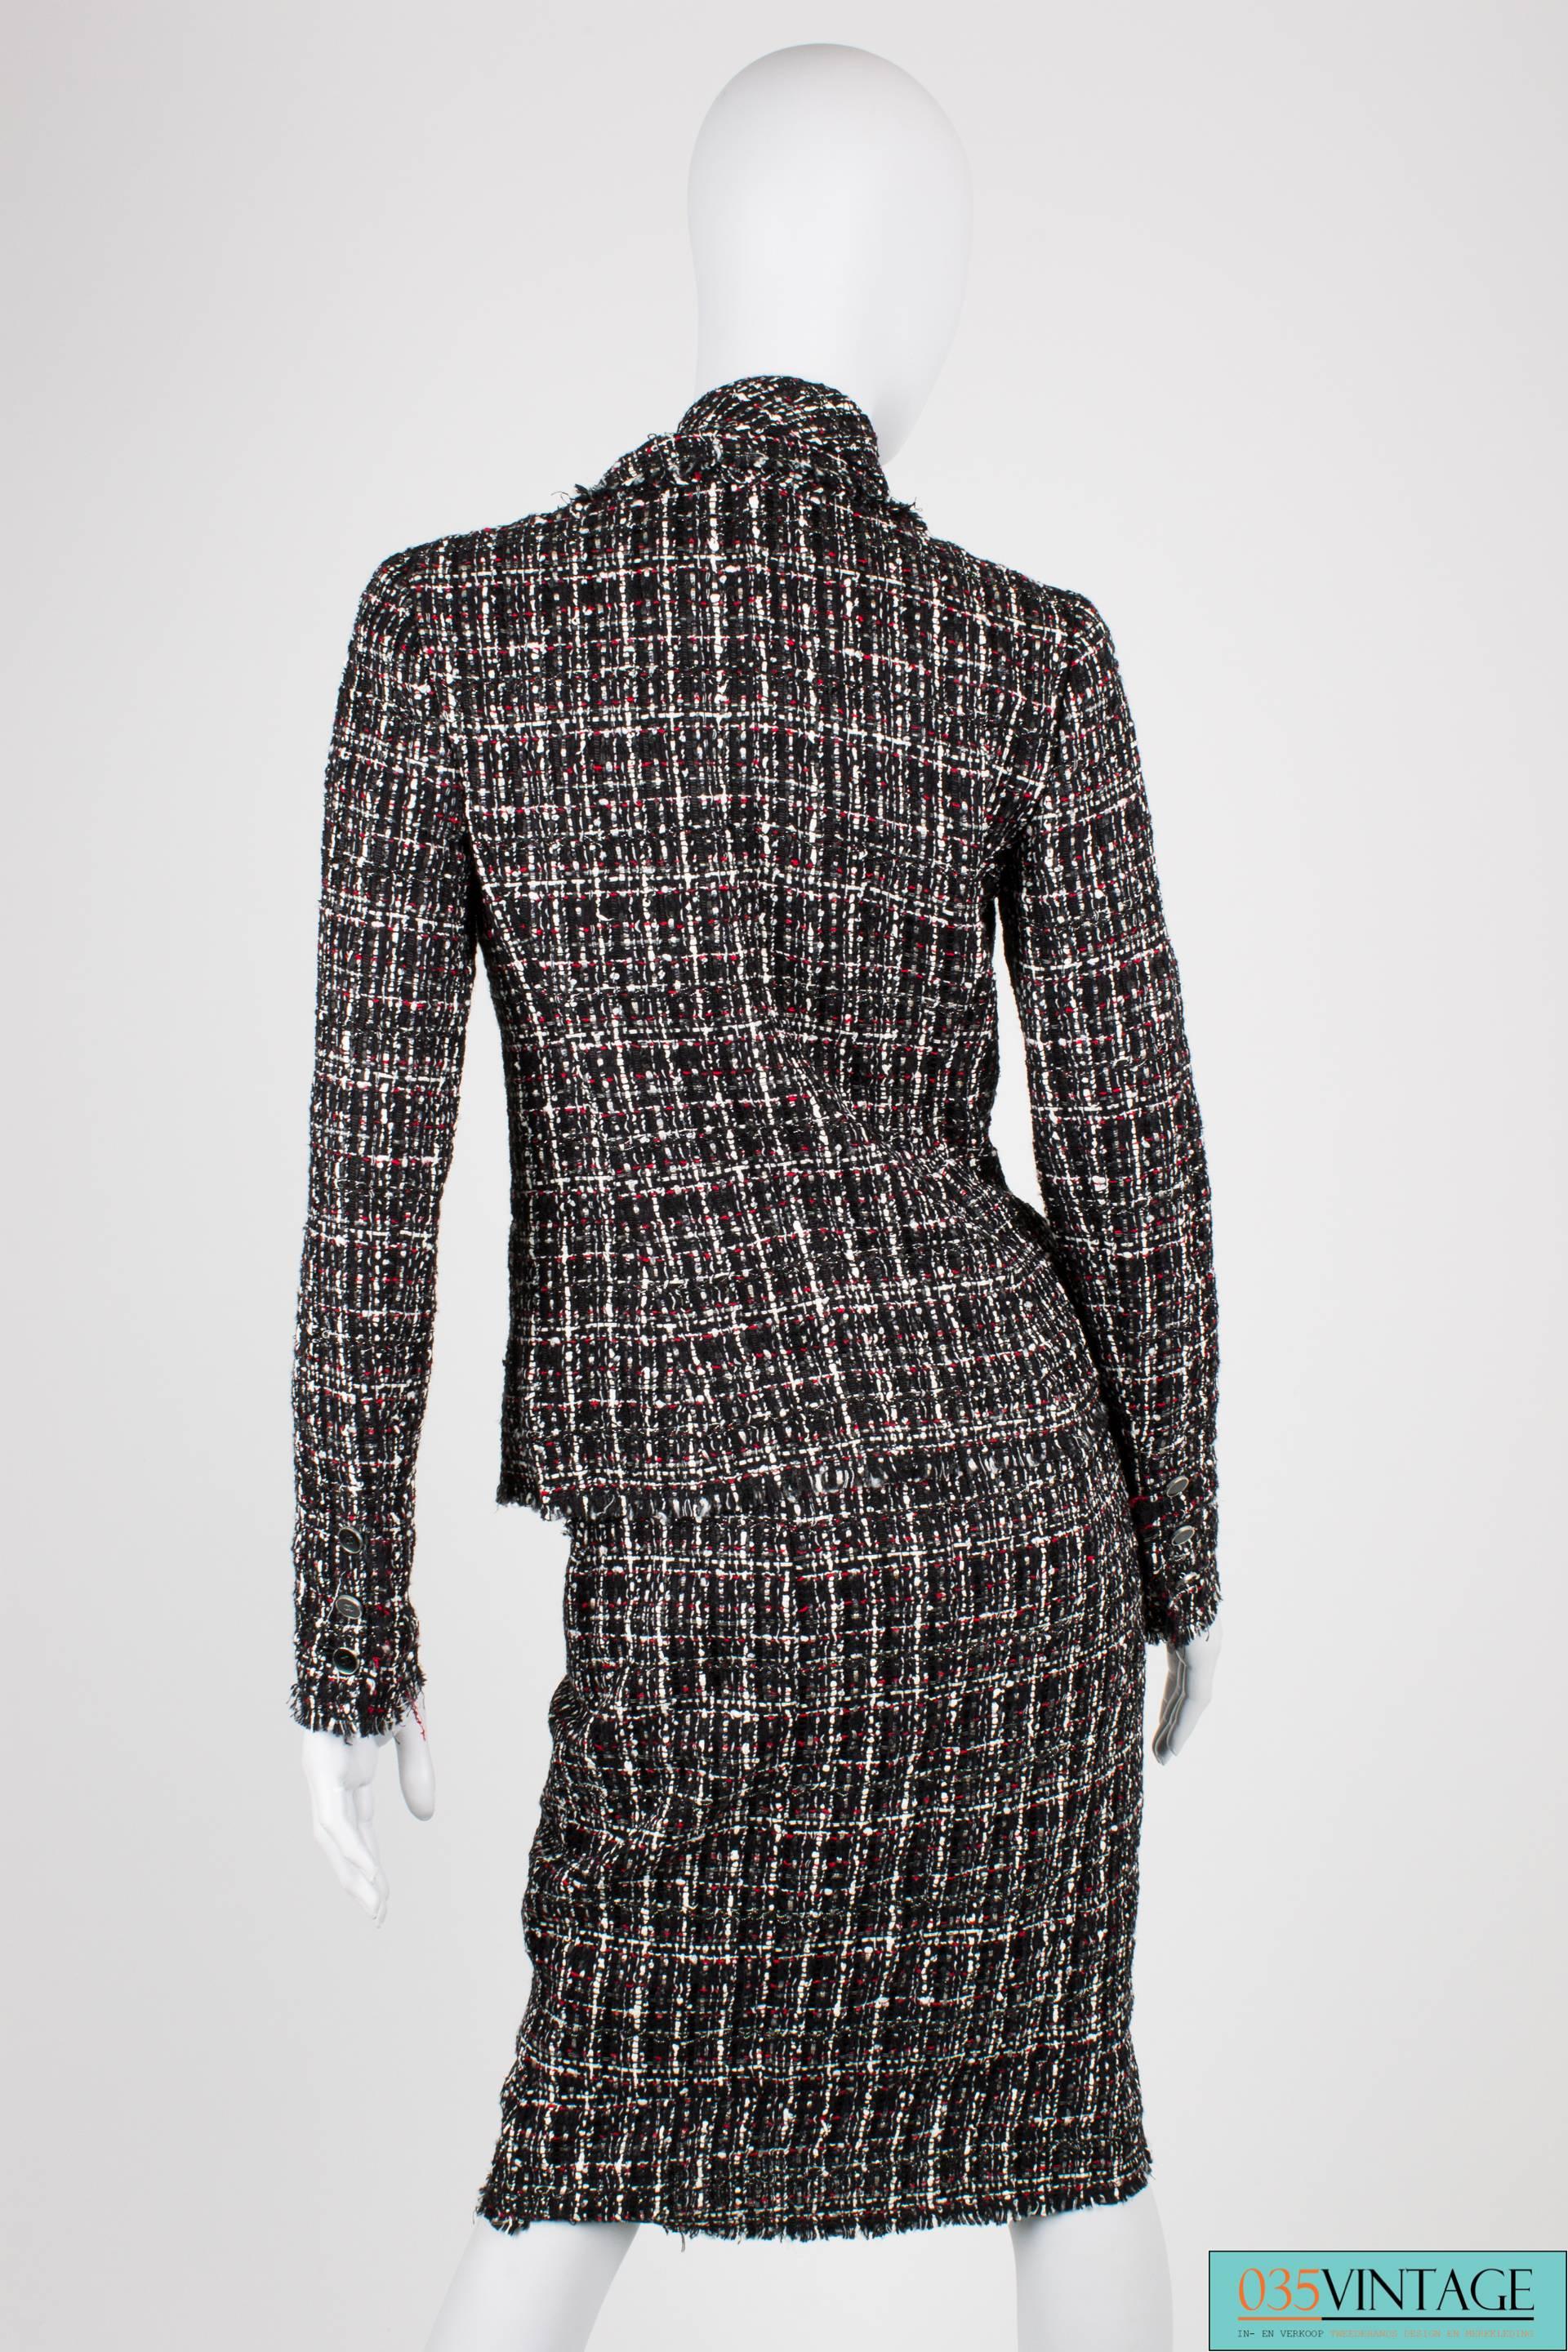 Black Chanel Suit 3-pcs Jacket, Skirt & Tie - black/white/grey/red For Sale